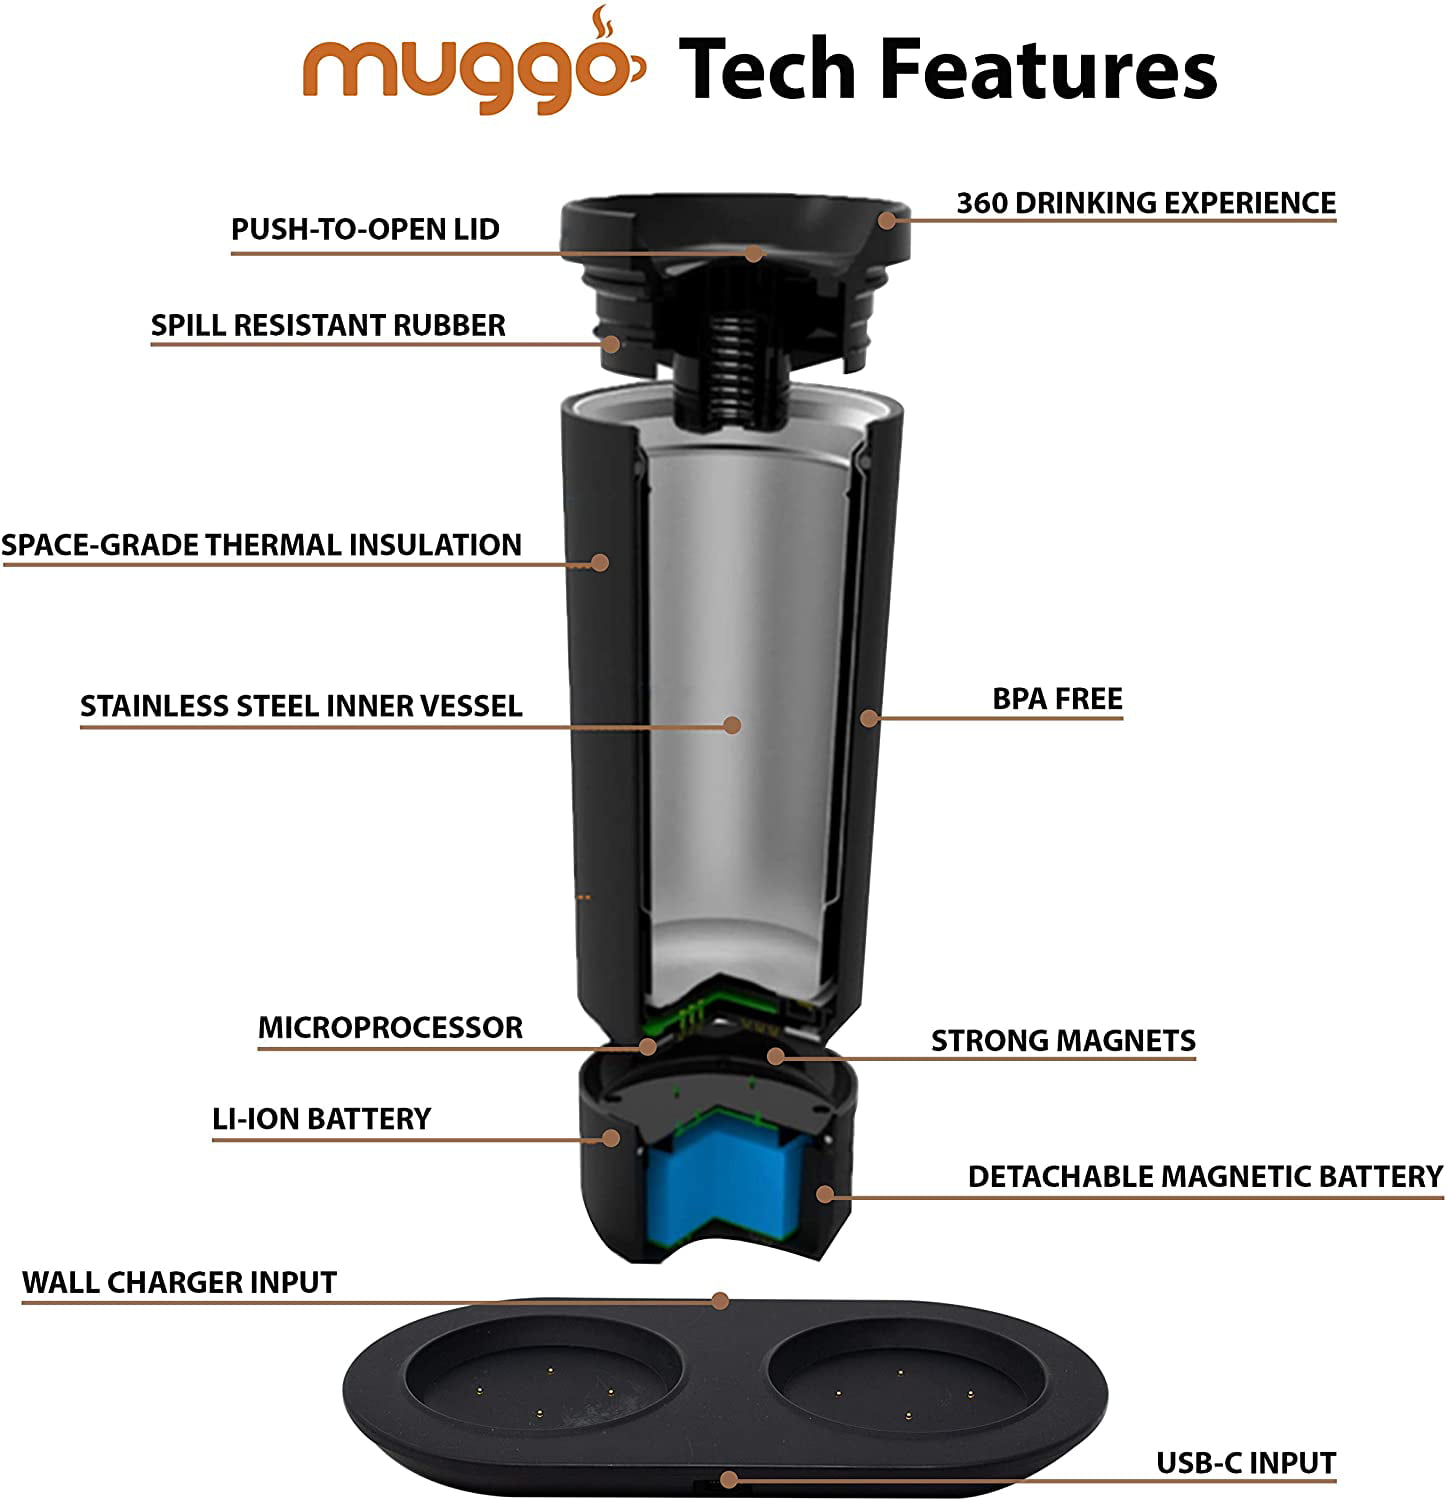 Muggo 2.0 Self-Heating Temperature Control Travel Mug - 12 oz Capacity